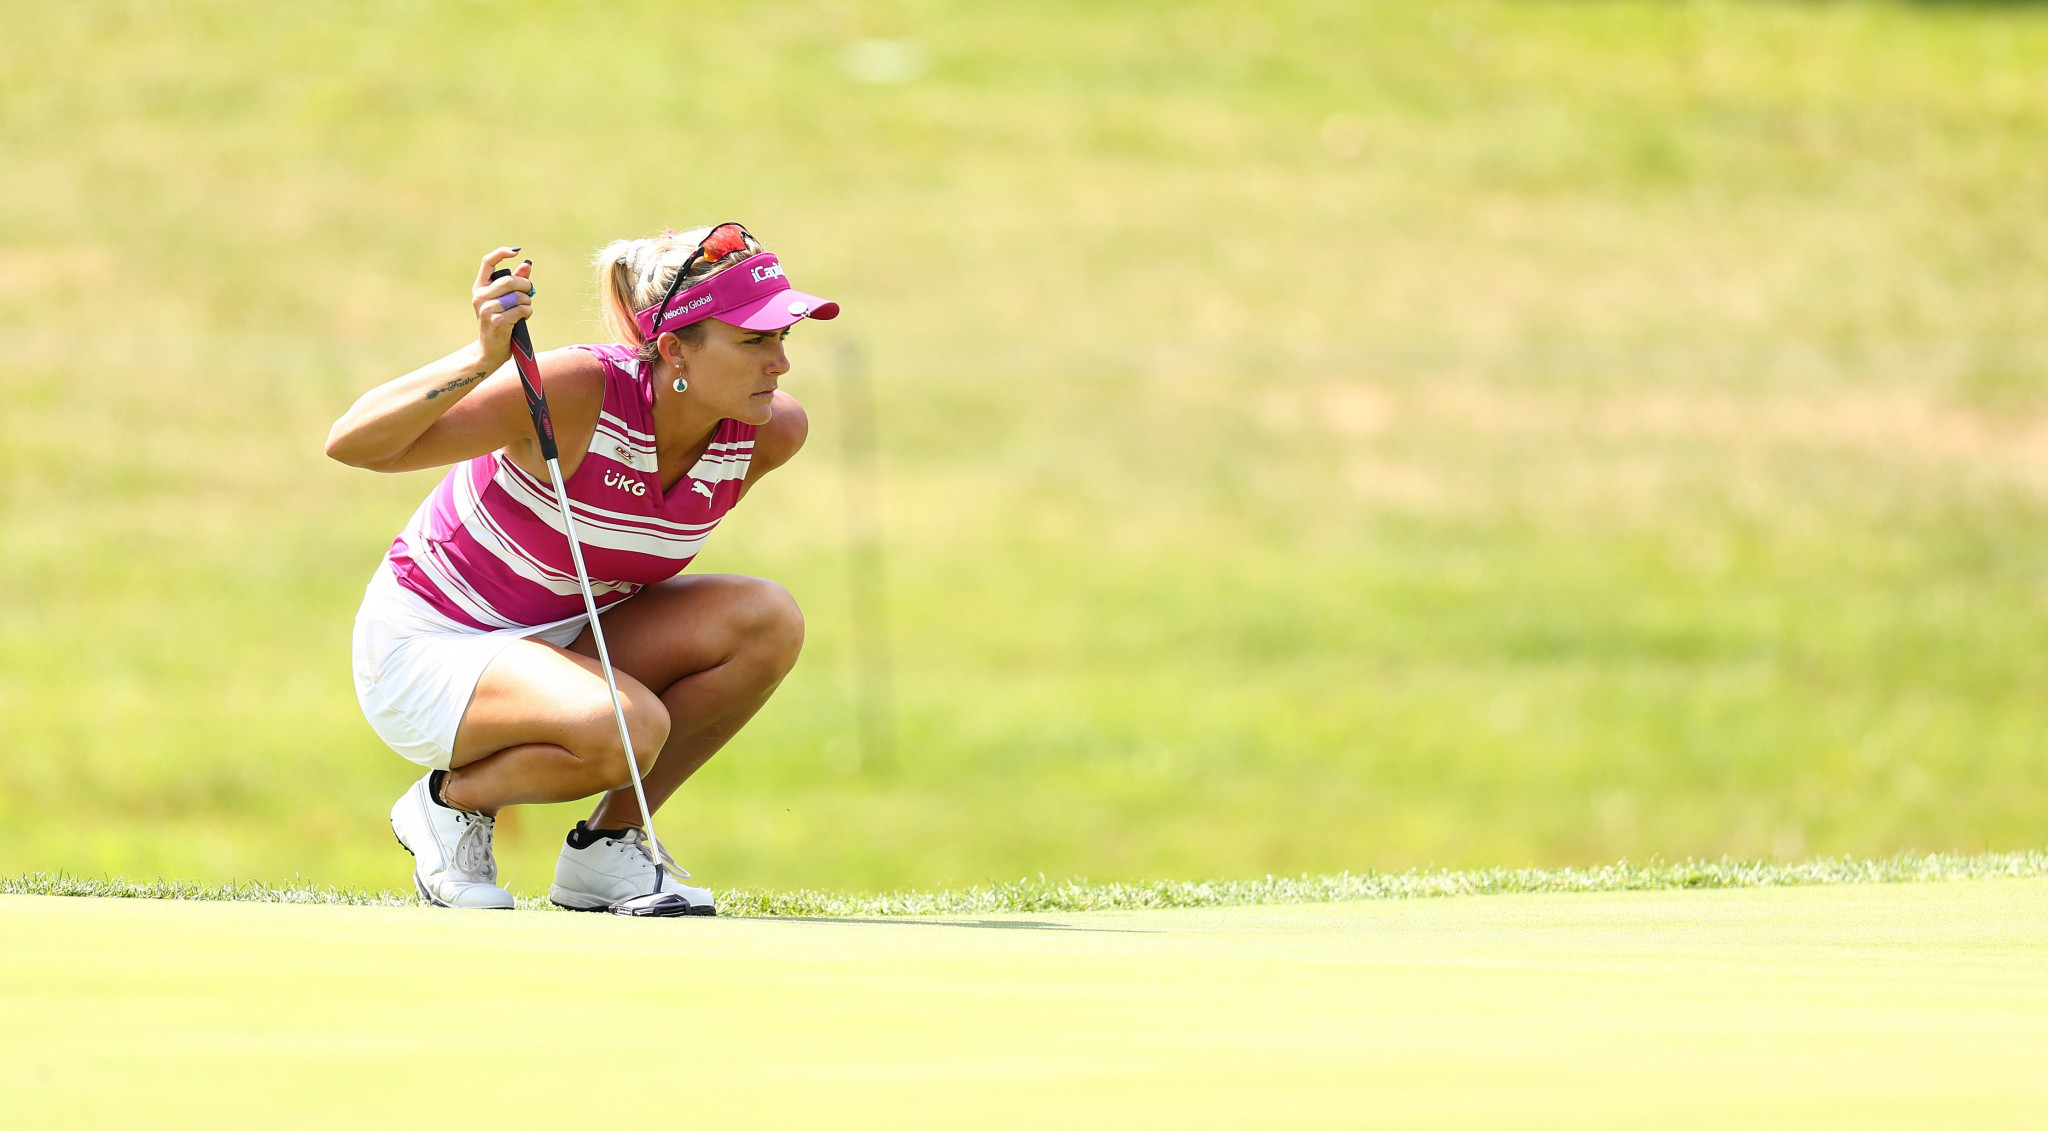 Chun's Women's PGA Championship lead down to three shots as Thompson makes move